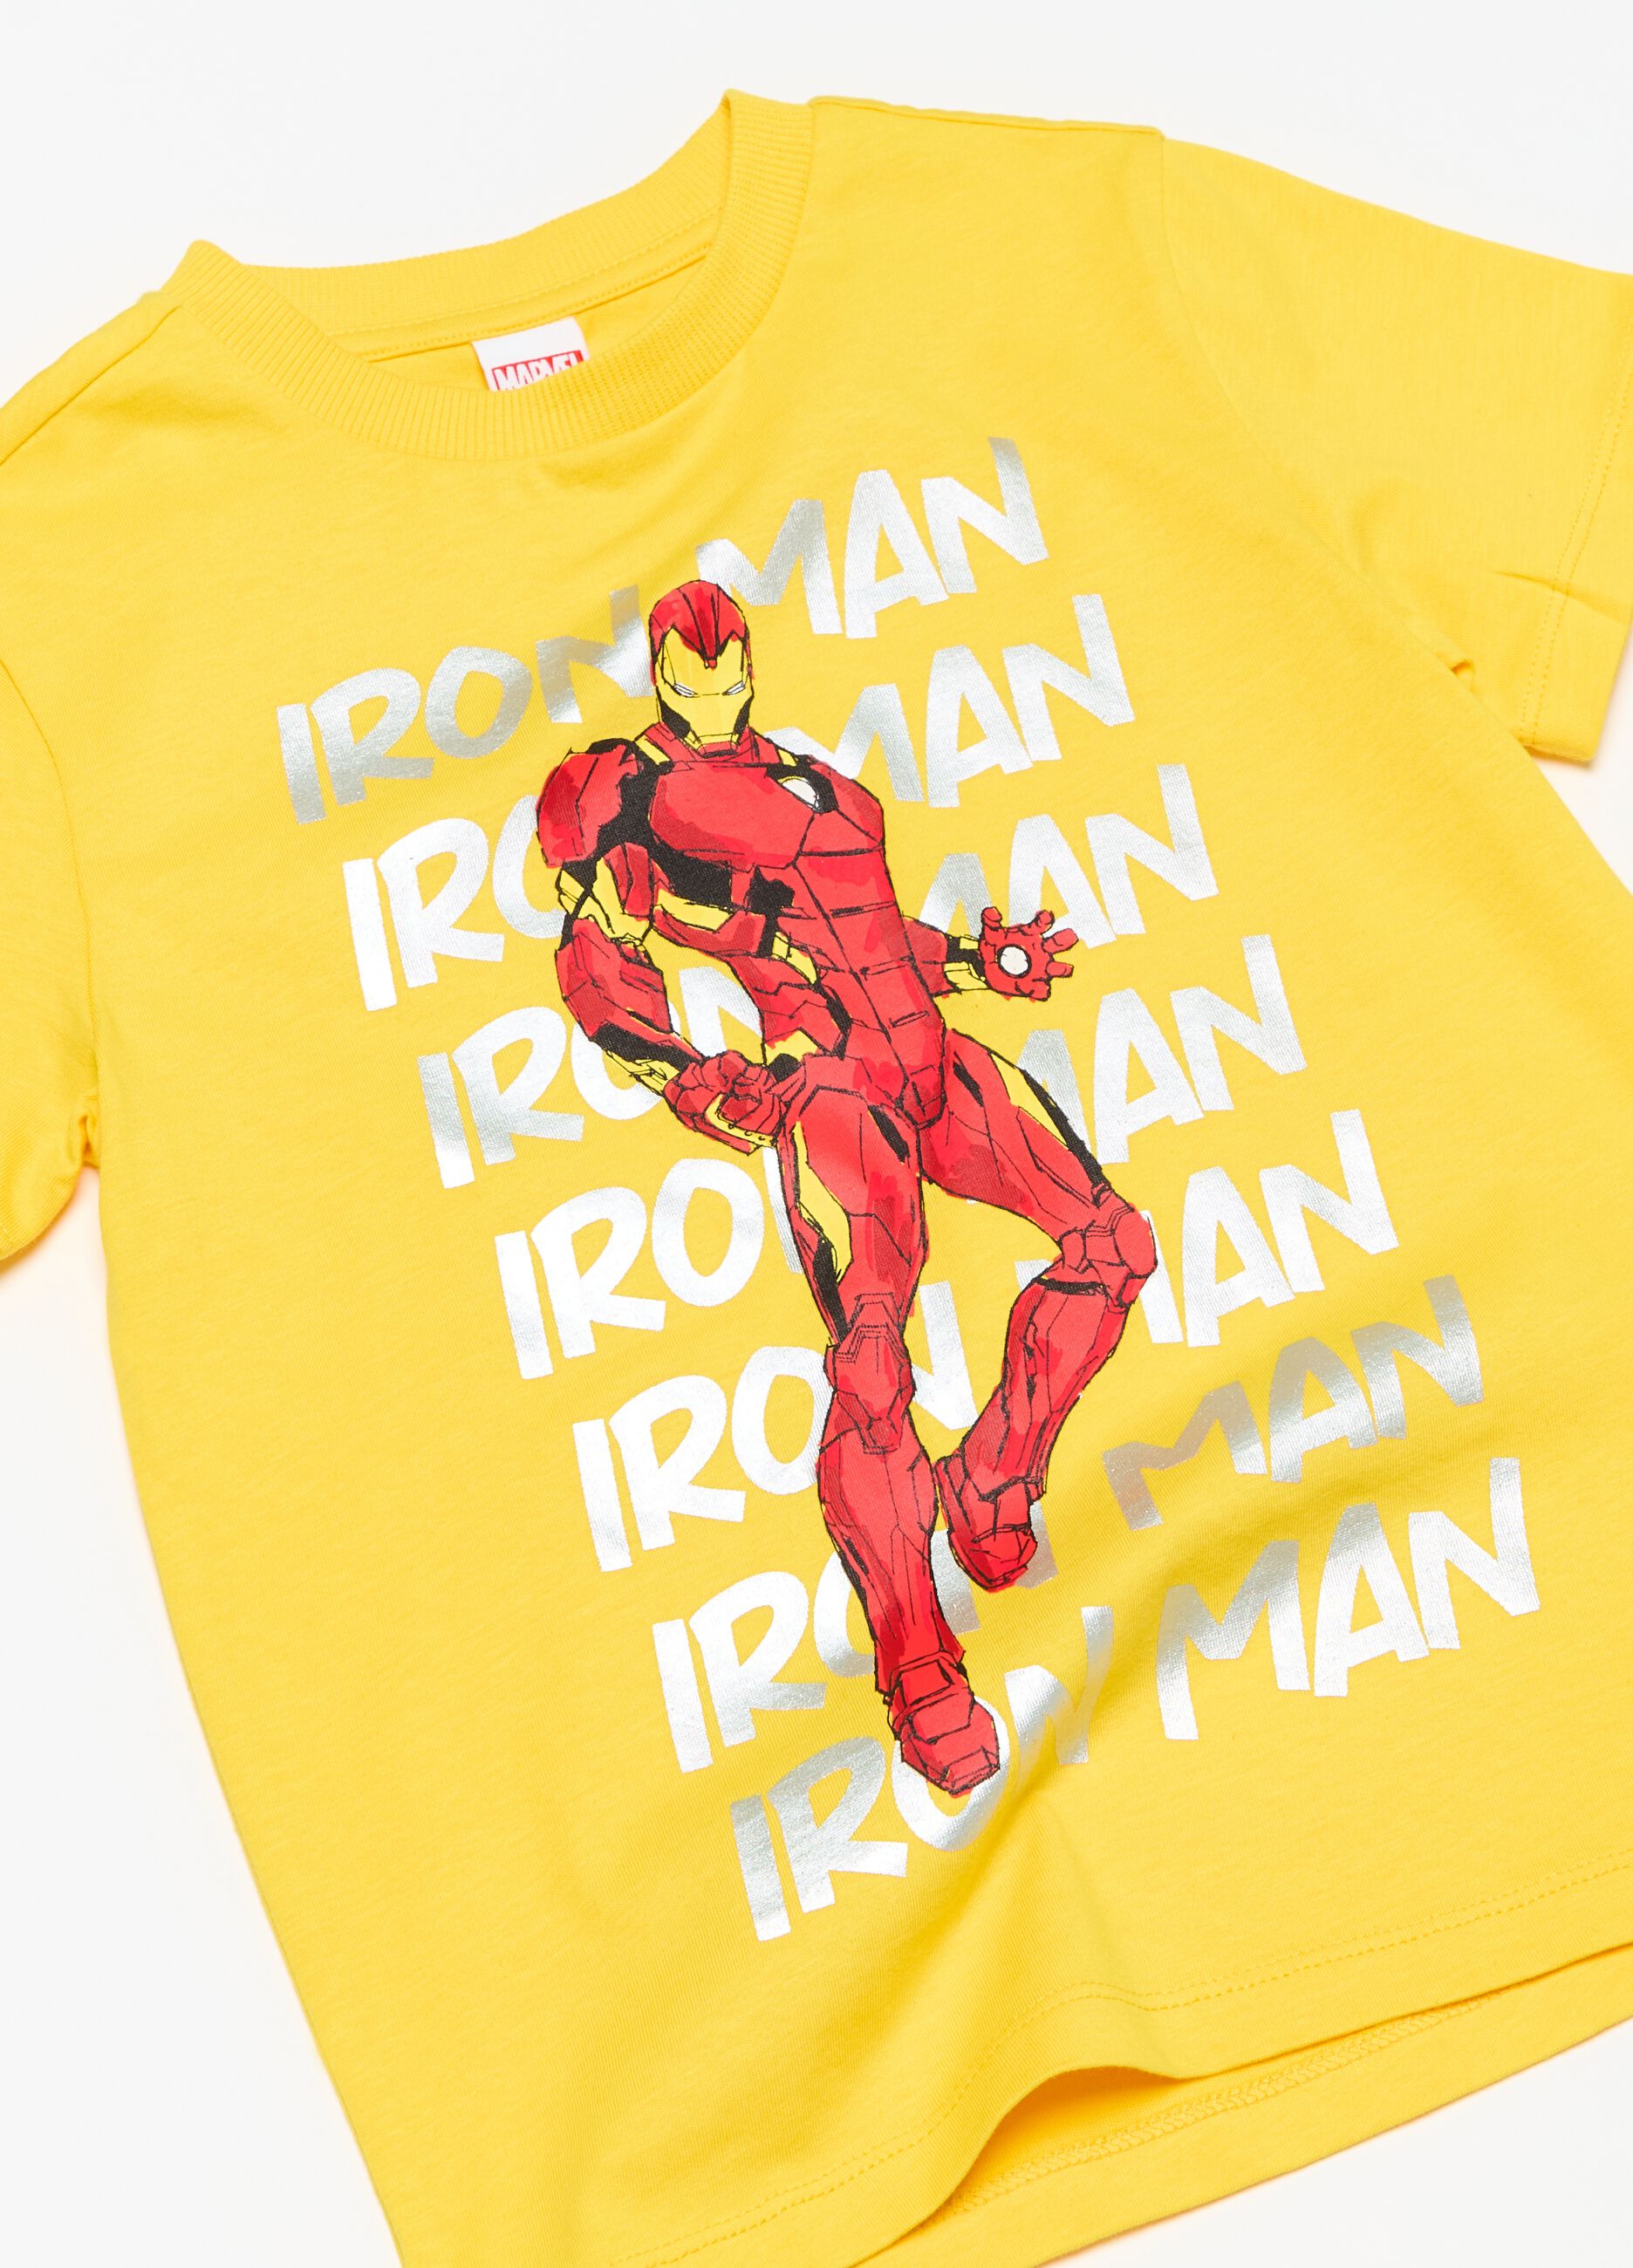 Cotton jogging set with Iron Man print